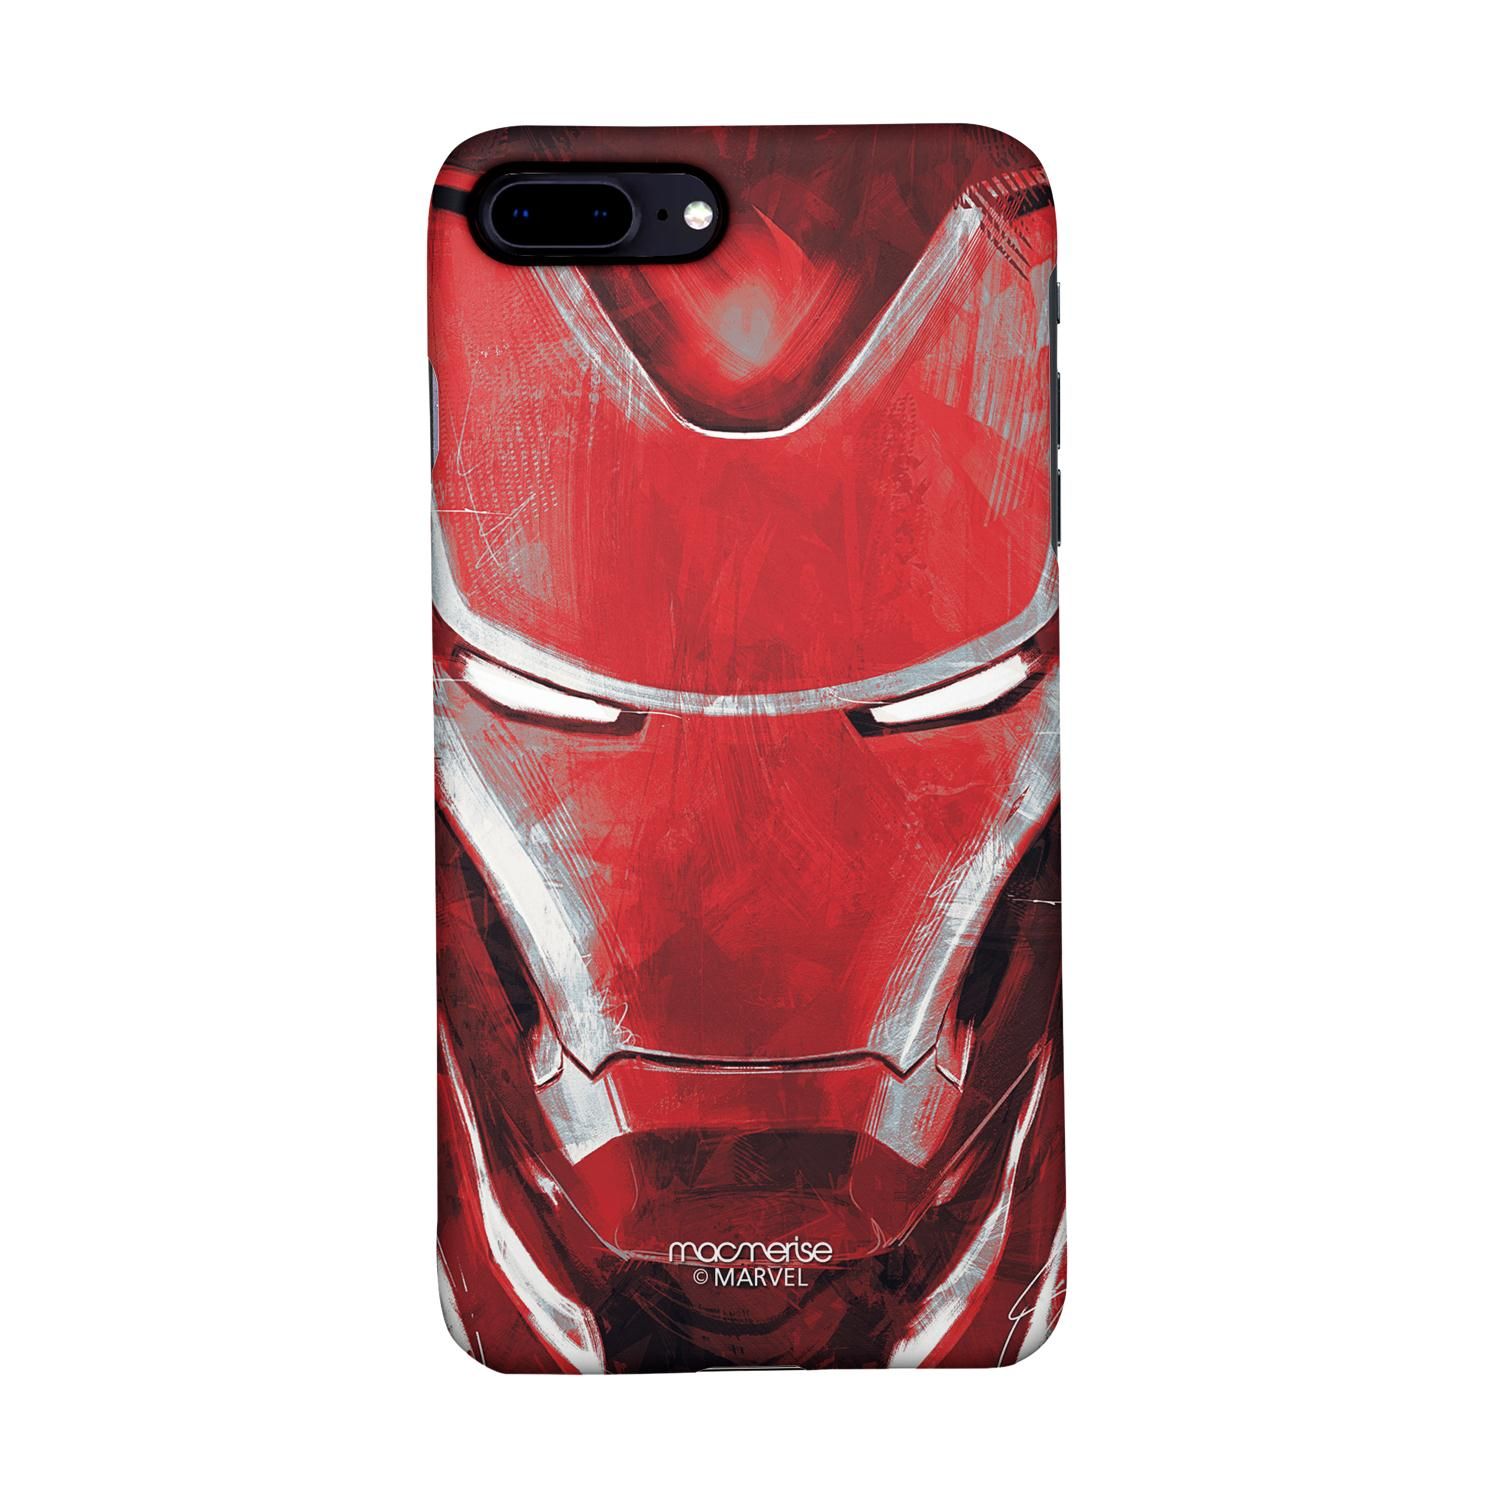 Buy Charcoal Art Iron man - Sleek Phone Case for iPhone 8 Plus Online